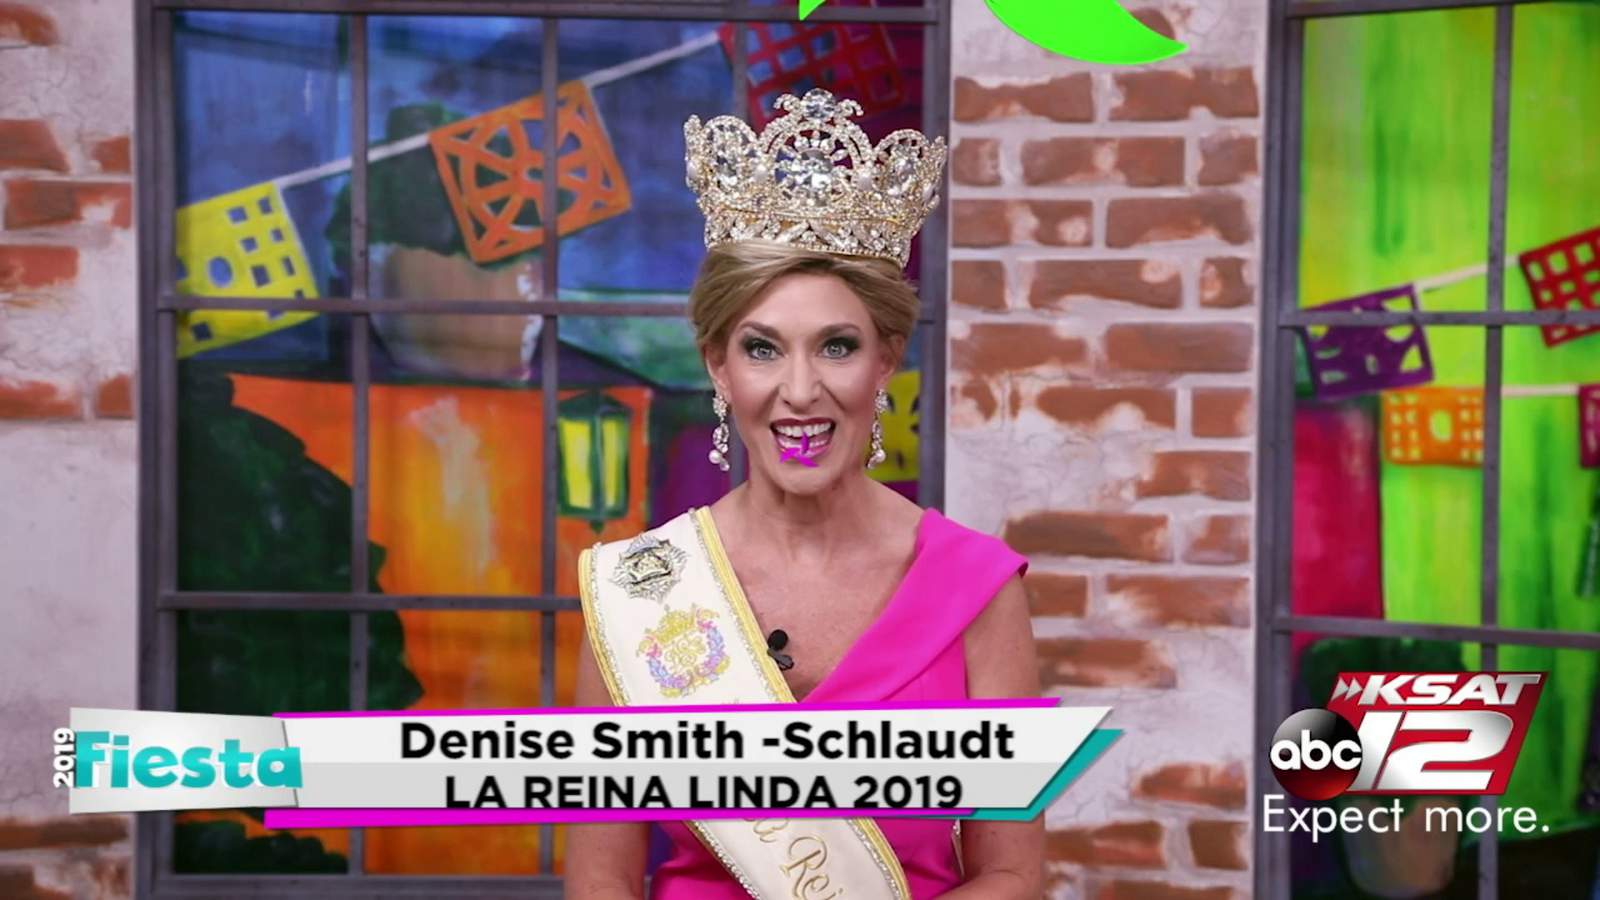 La Reina Linda 2019